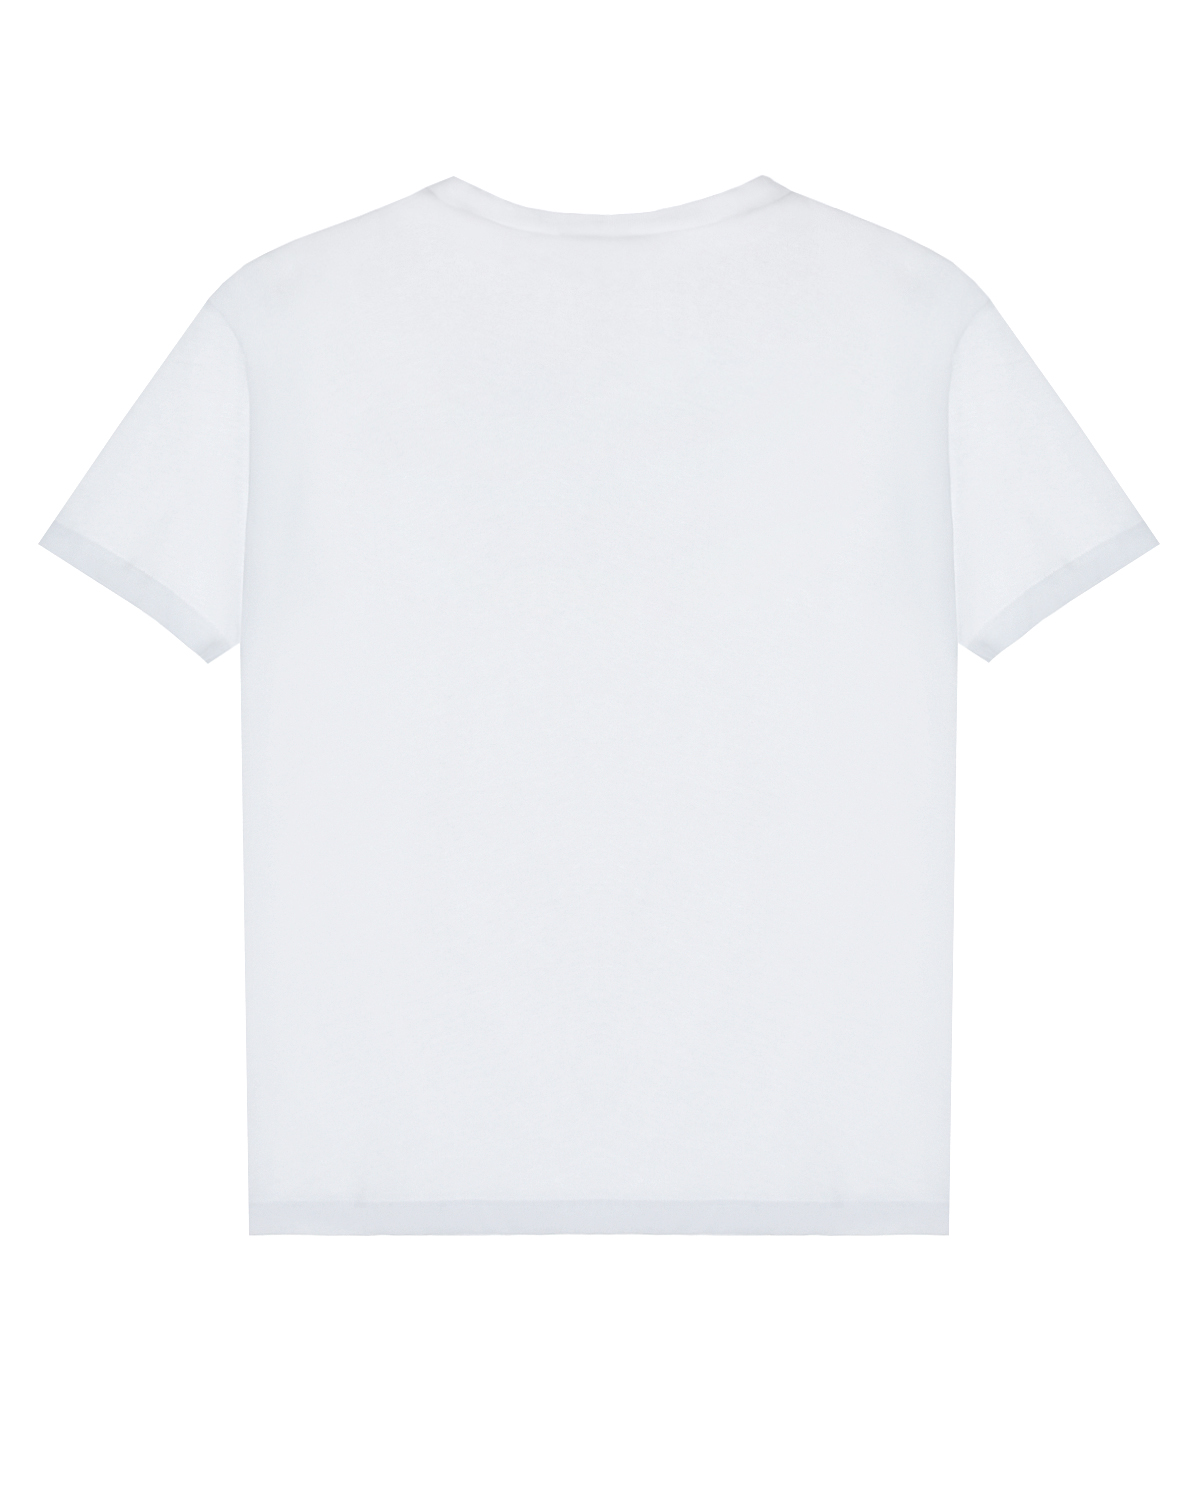 Белая футболка с надписью Lovely Dsquared2 детская, размер 152, цвет белый - фото 2